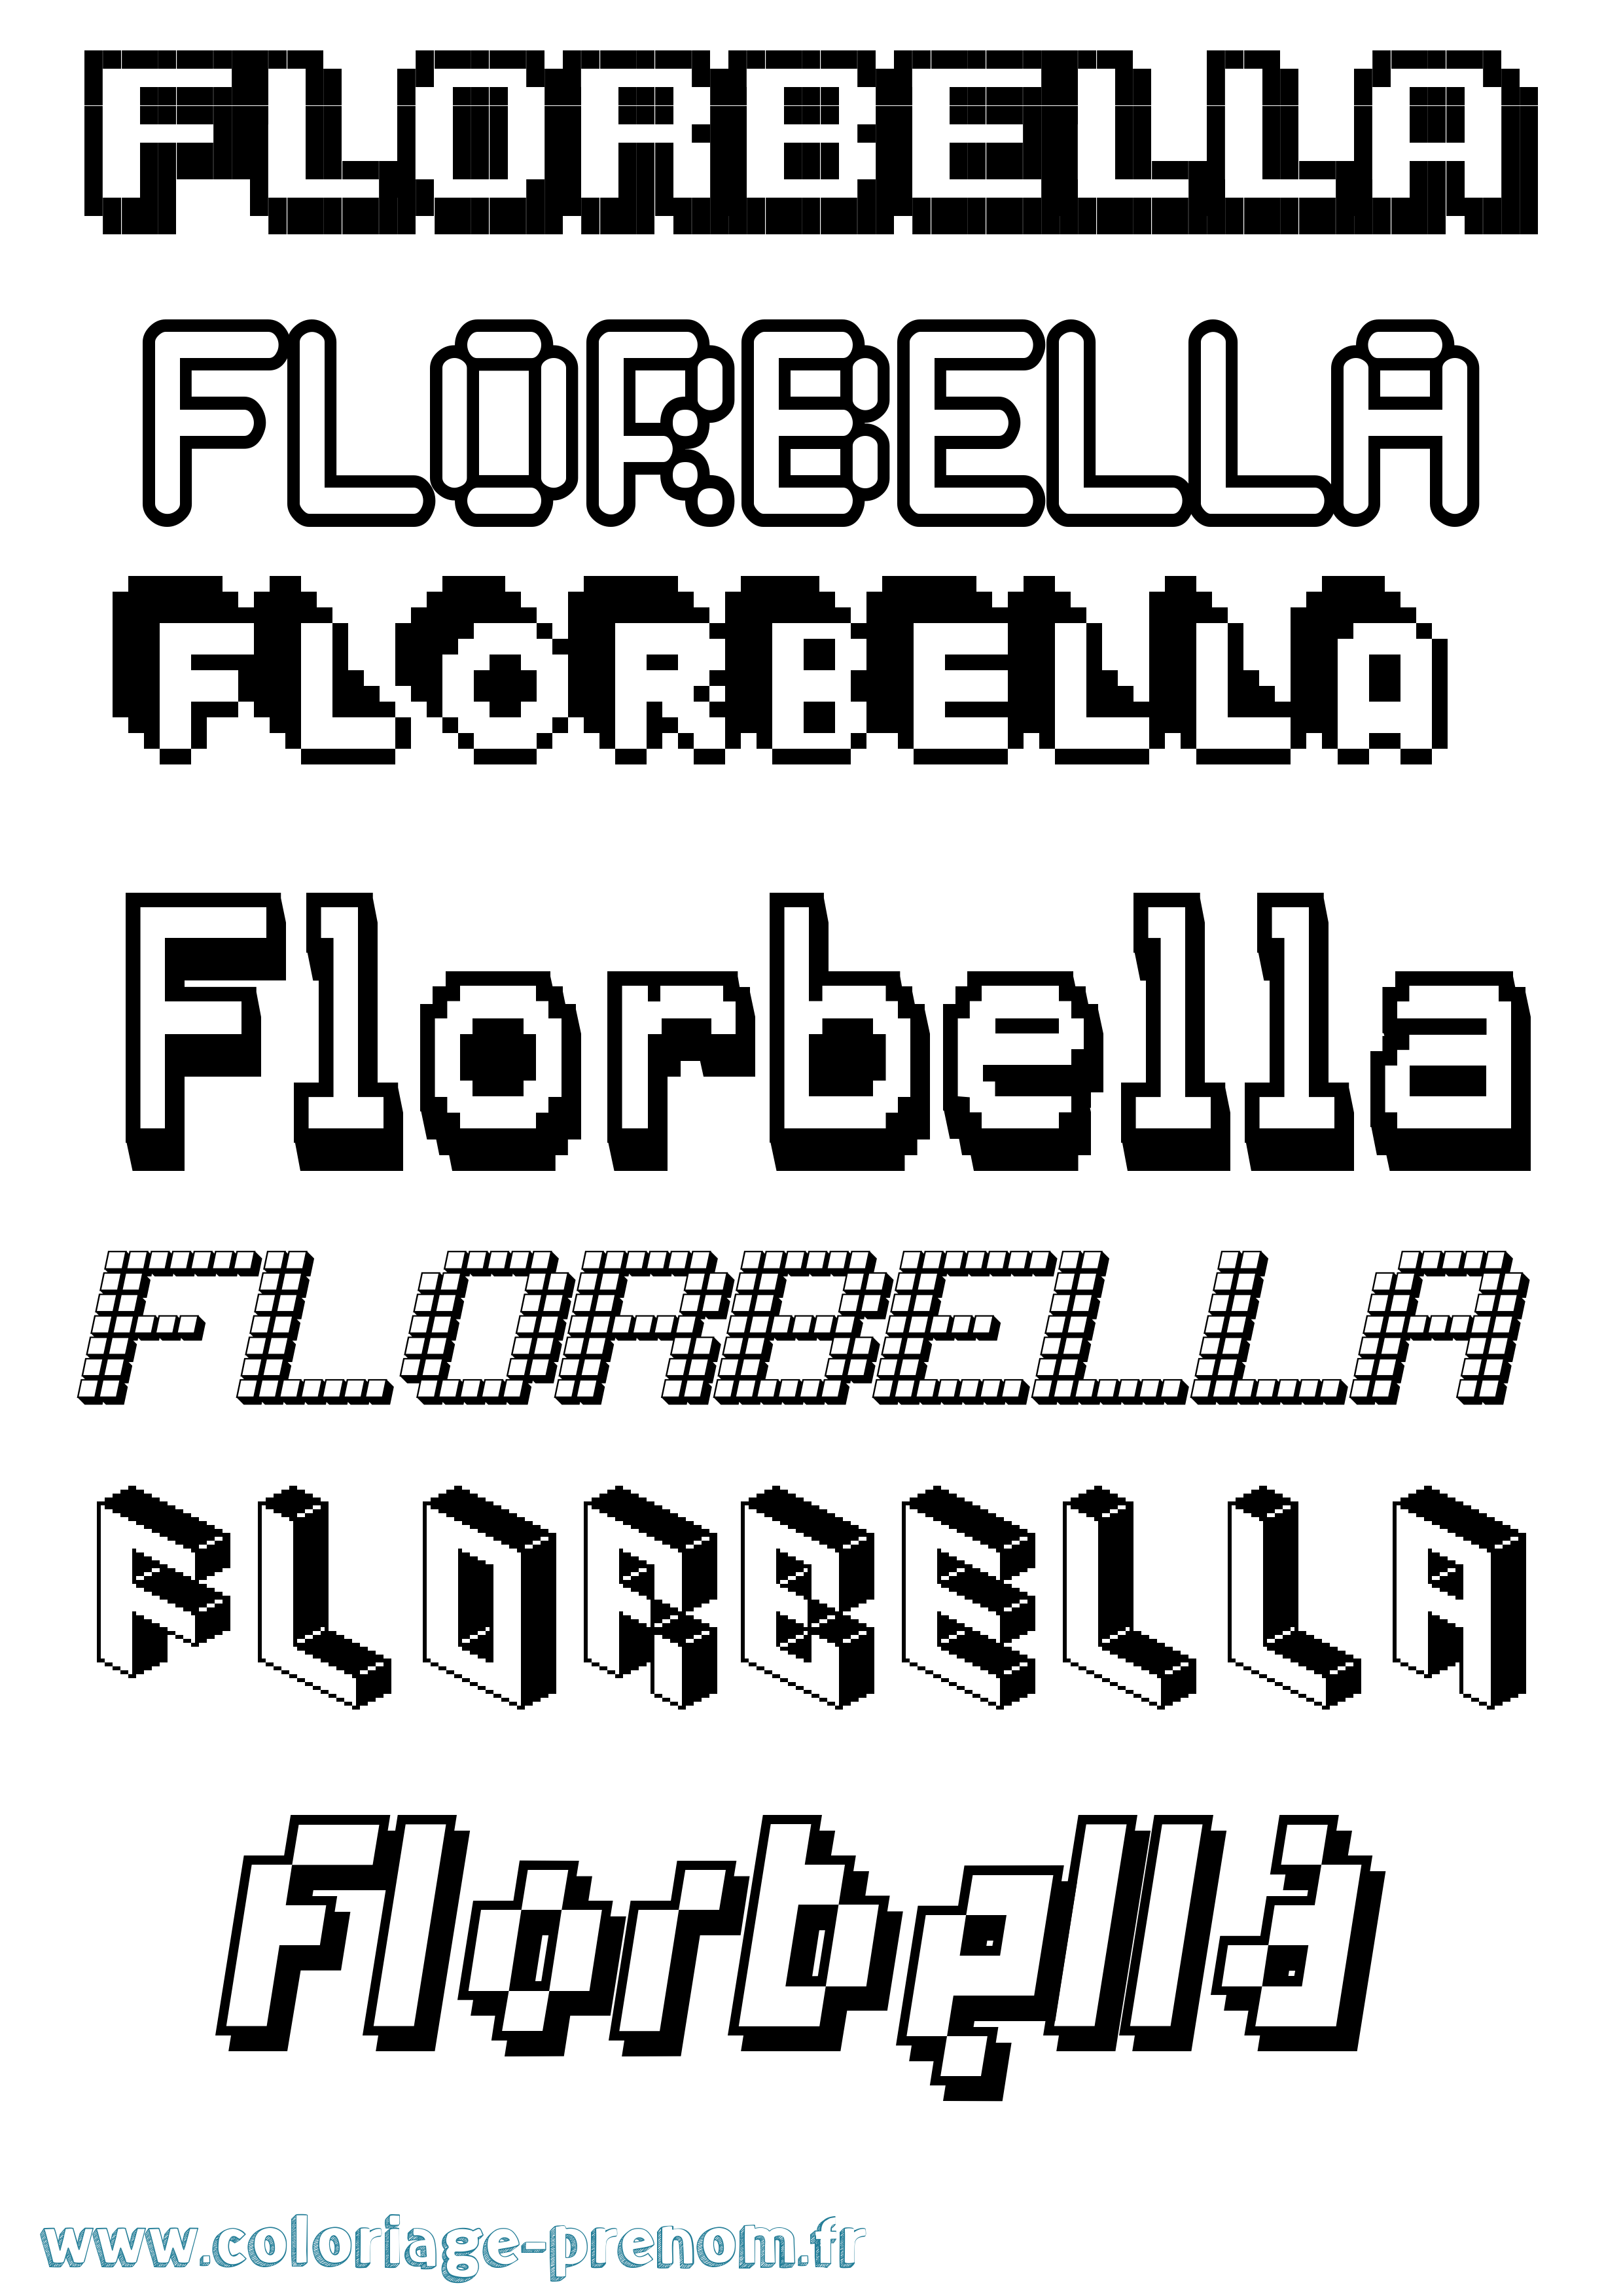 Coloriage prénom Florbella Pixel